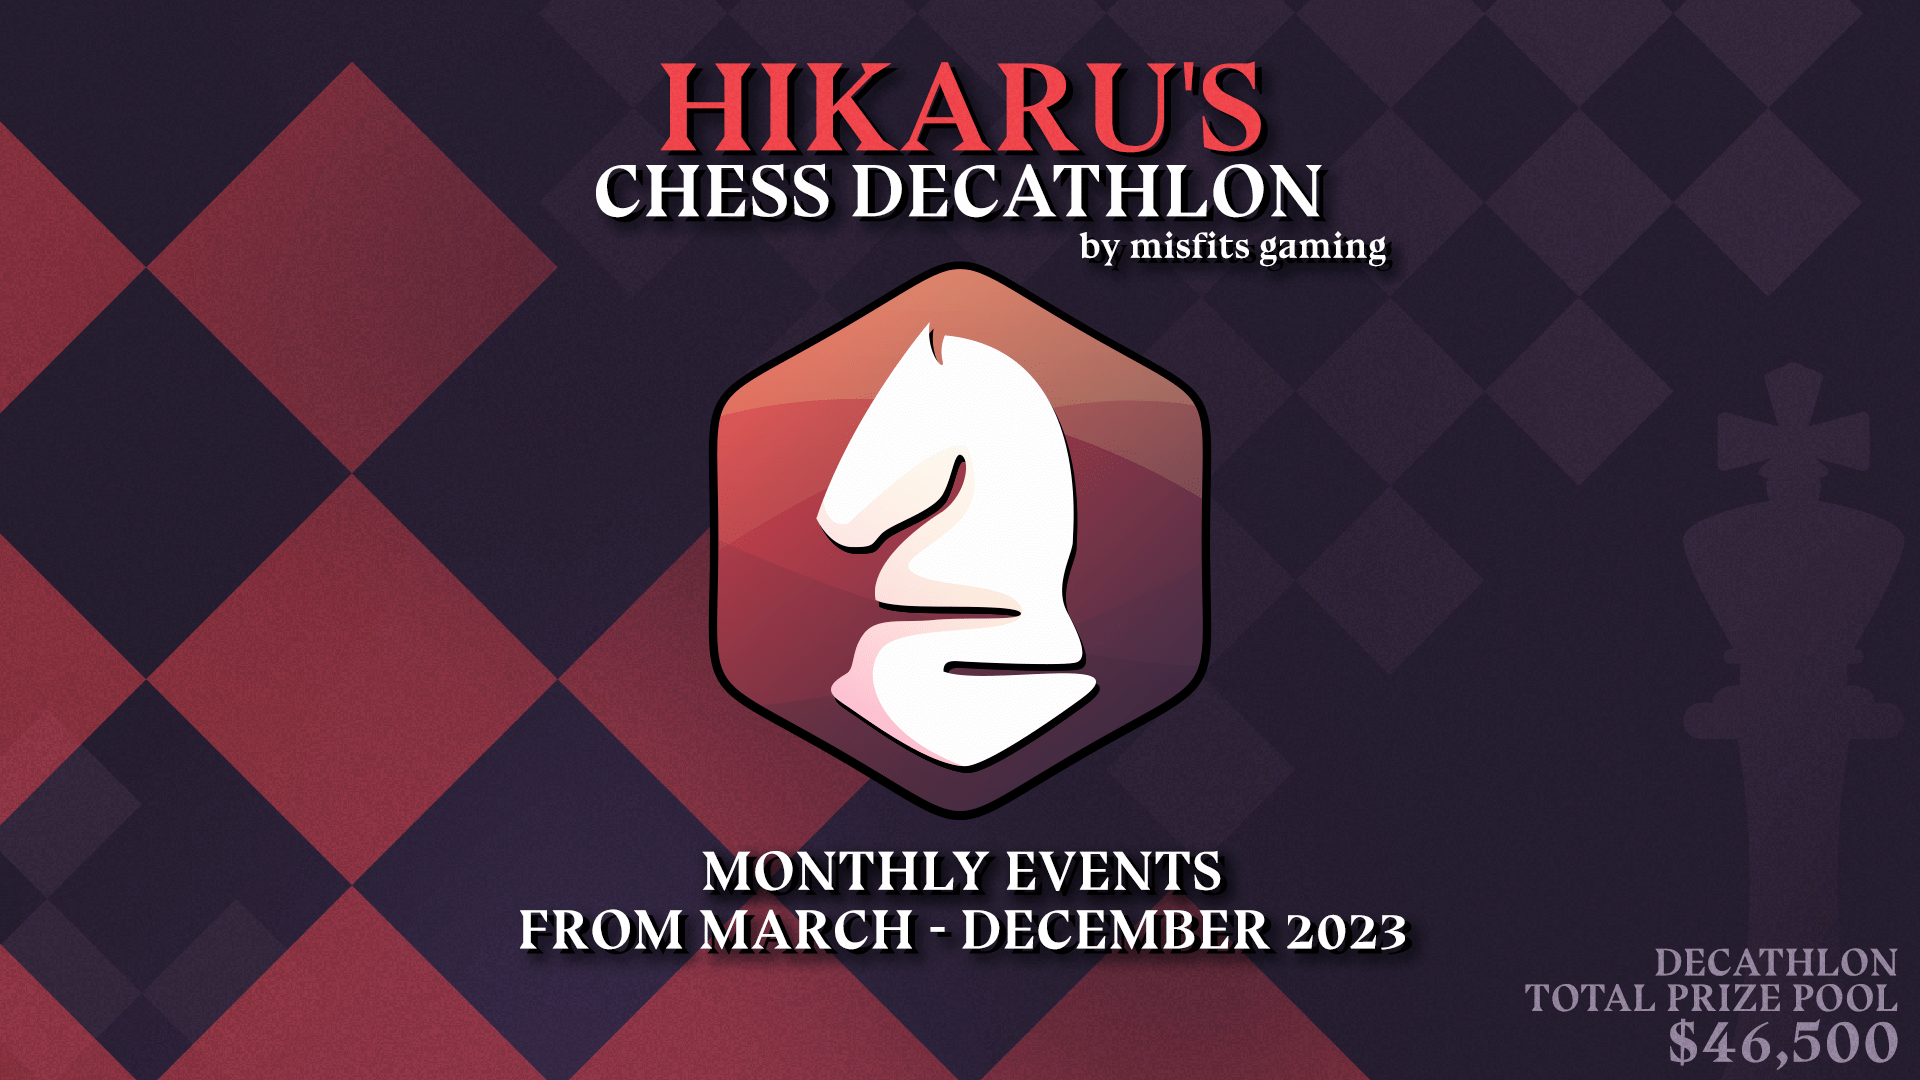 Hikaru’s Chess Decathlon by Misfits Gaming